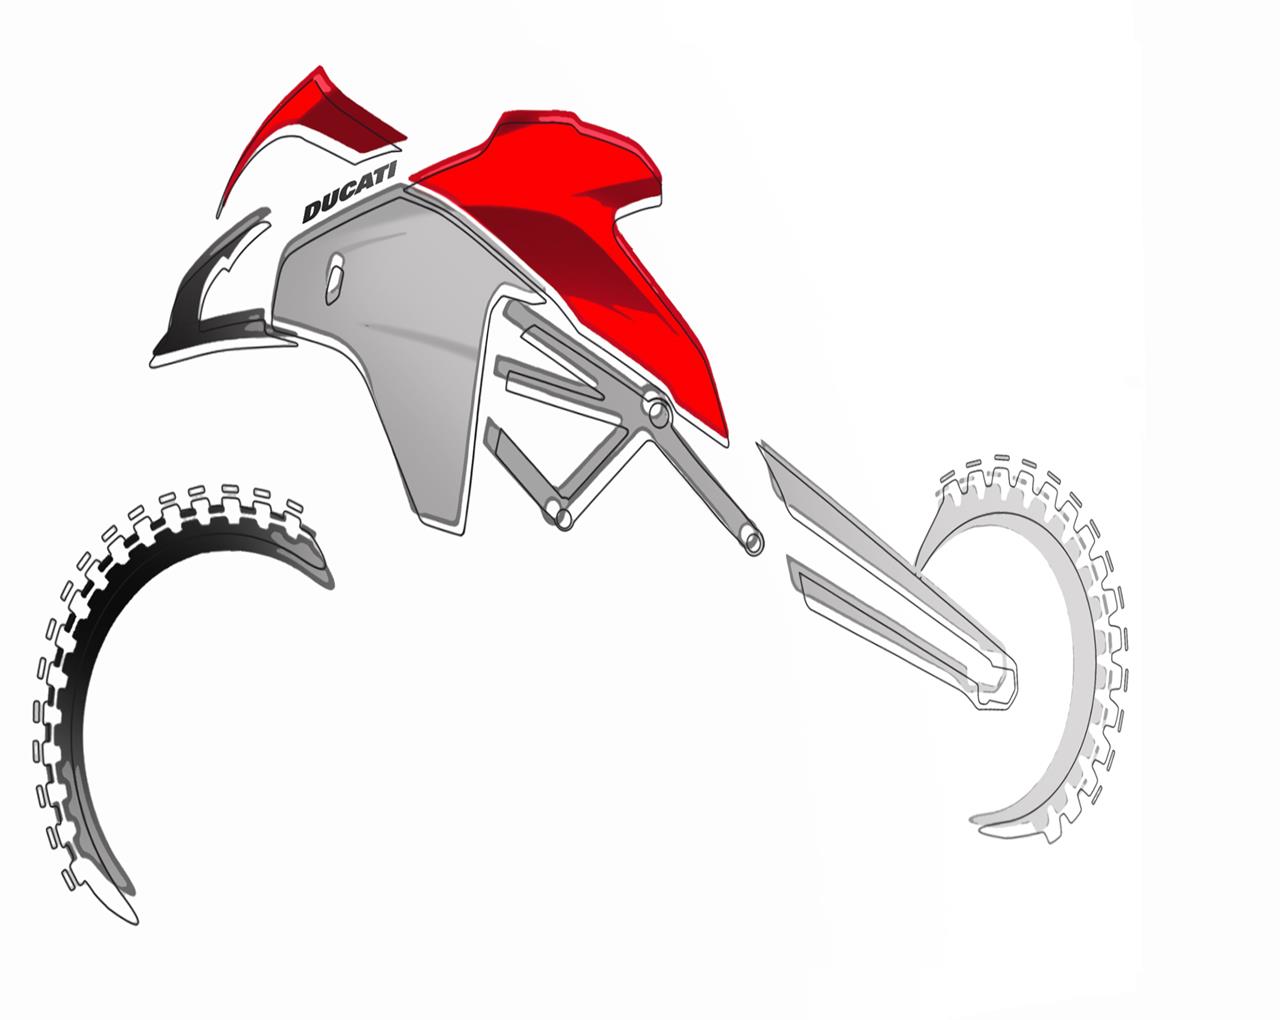 Ducati Multistrada Enduro 1200 - MEGA GALLERY